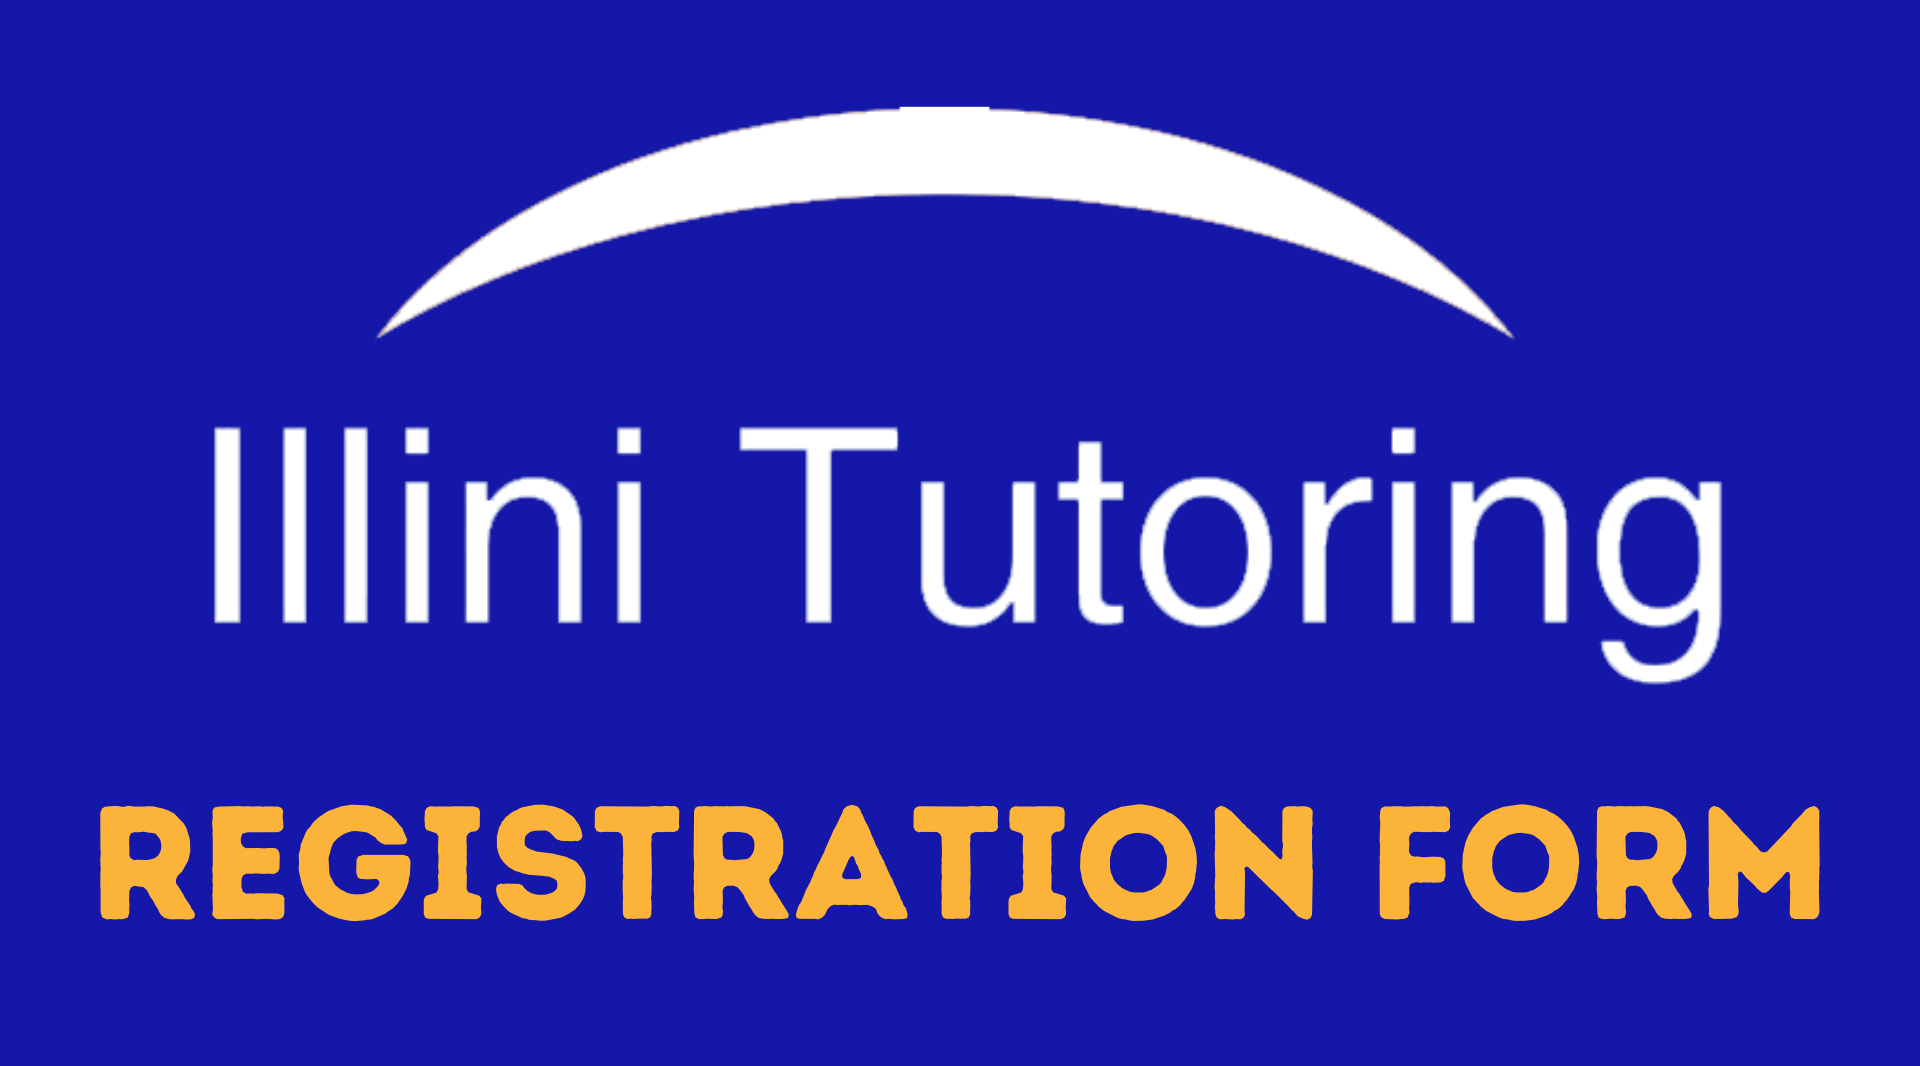 Illini Tutoring Registration Form